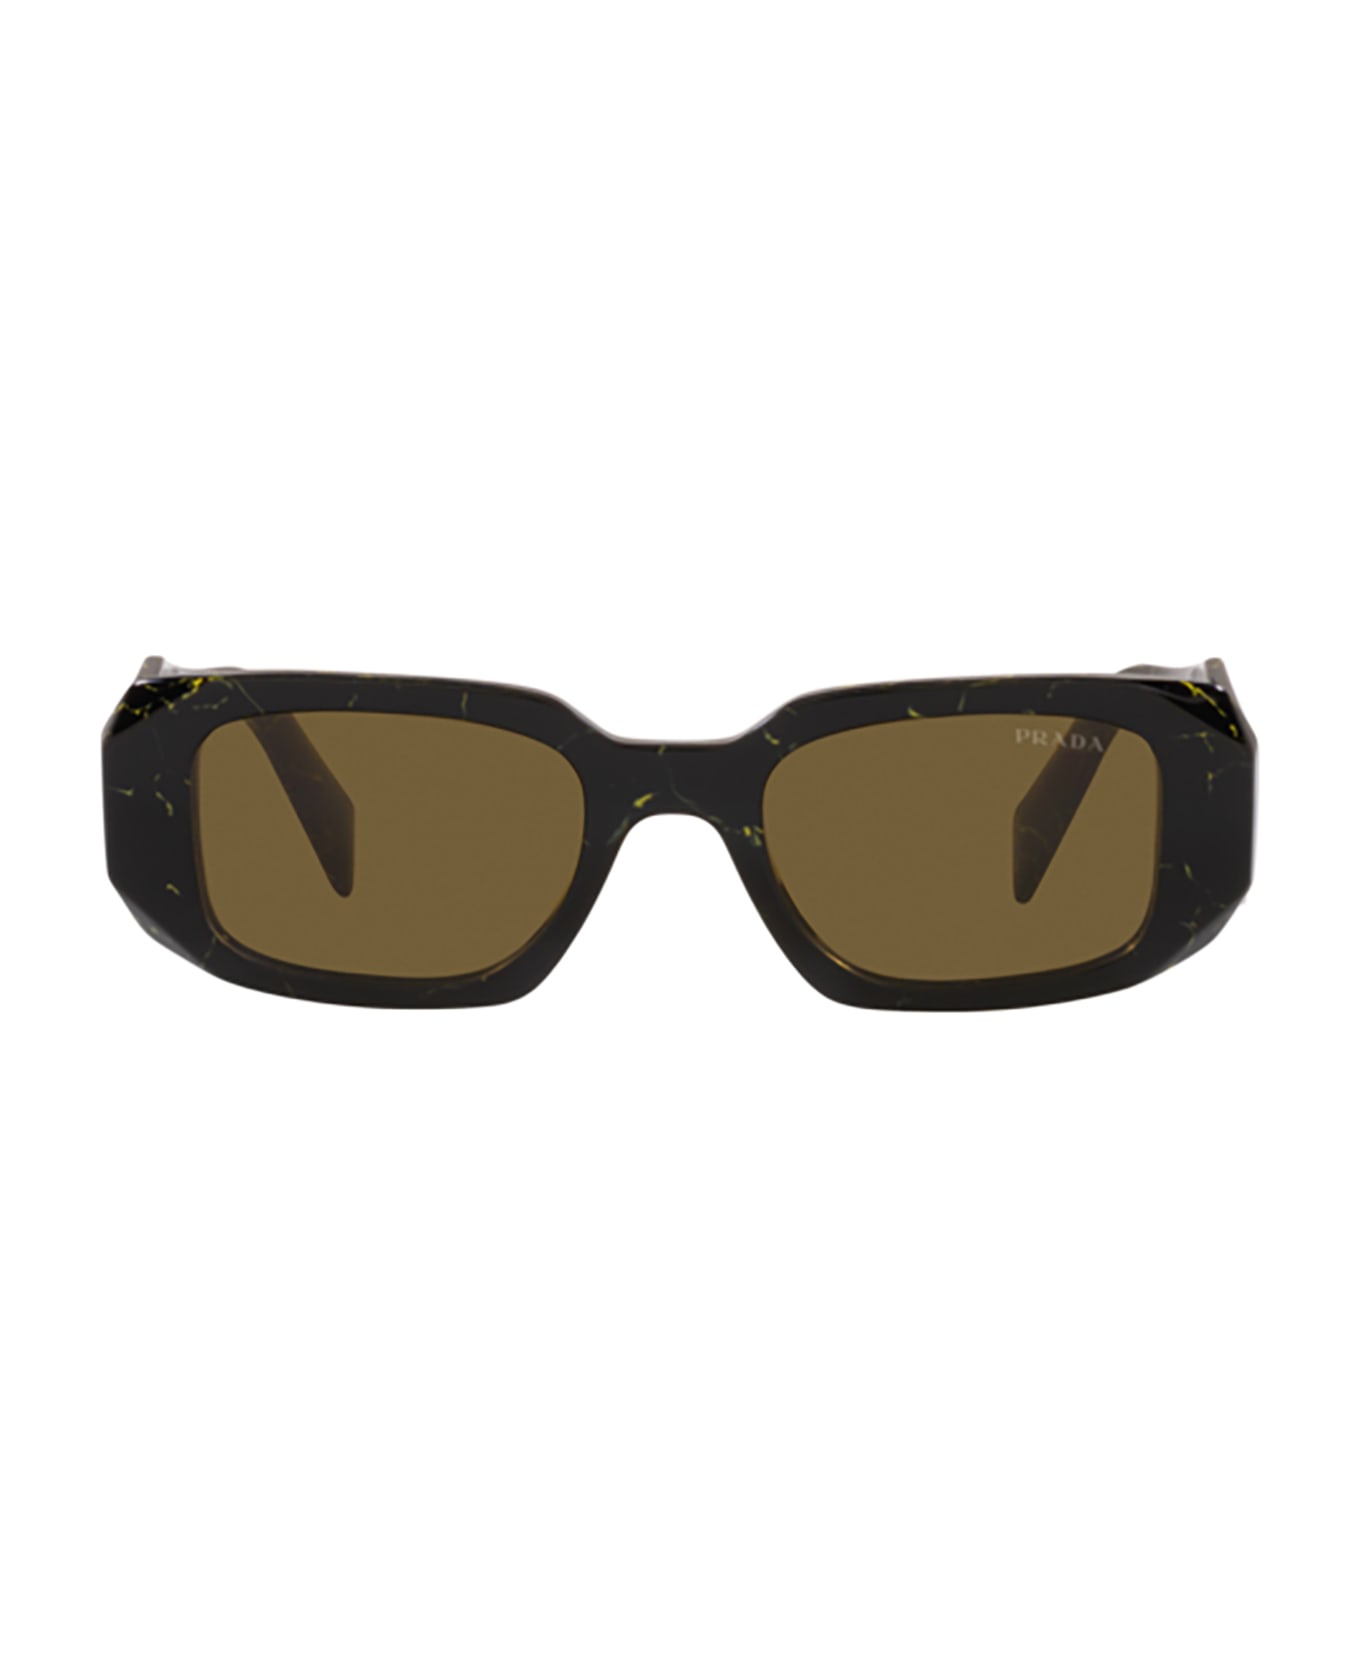 Prada Eyewear 17WS SOLE Sunglasses - T